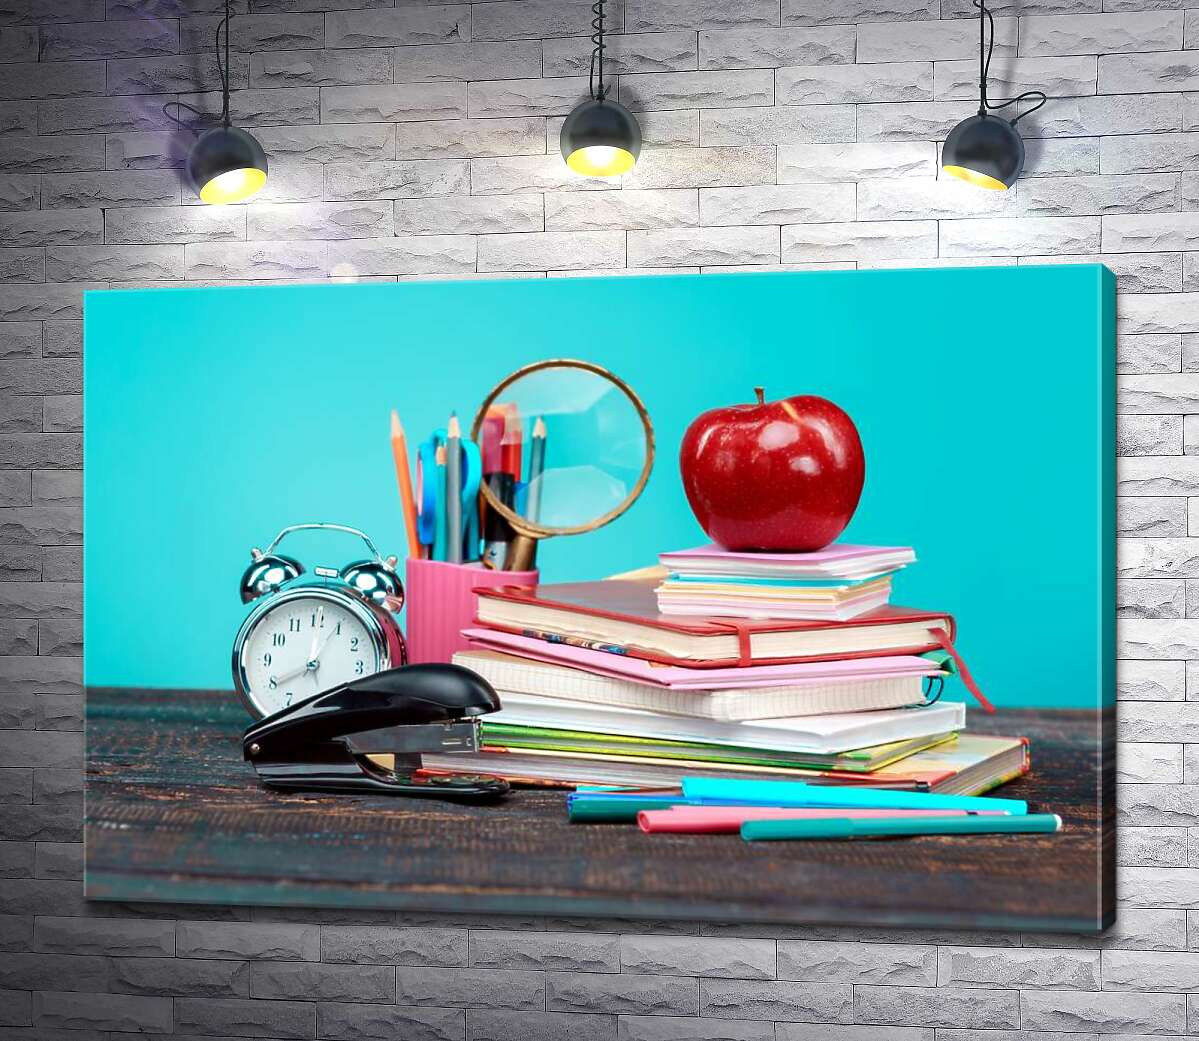 картина Натюрморт школьника: тетради, фломастеры, часы, степлер и яблоко